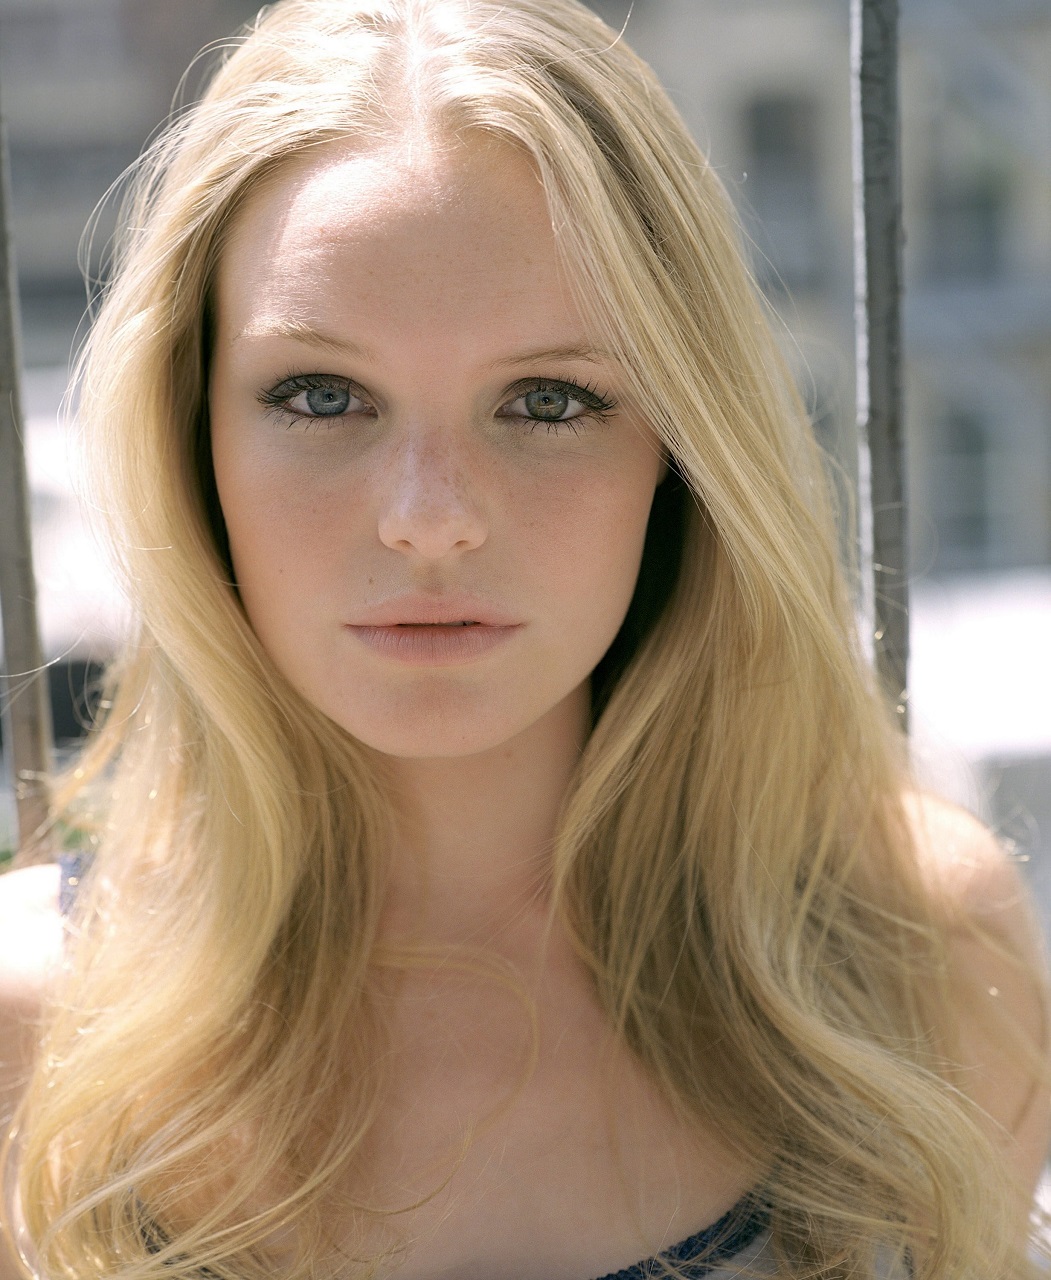 People 1051x1280 women model long hair Kate Bosworth blonde actress face celebrity American women portrait closeup gray eyes